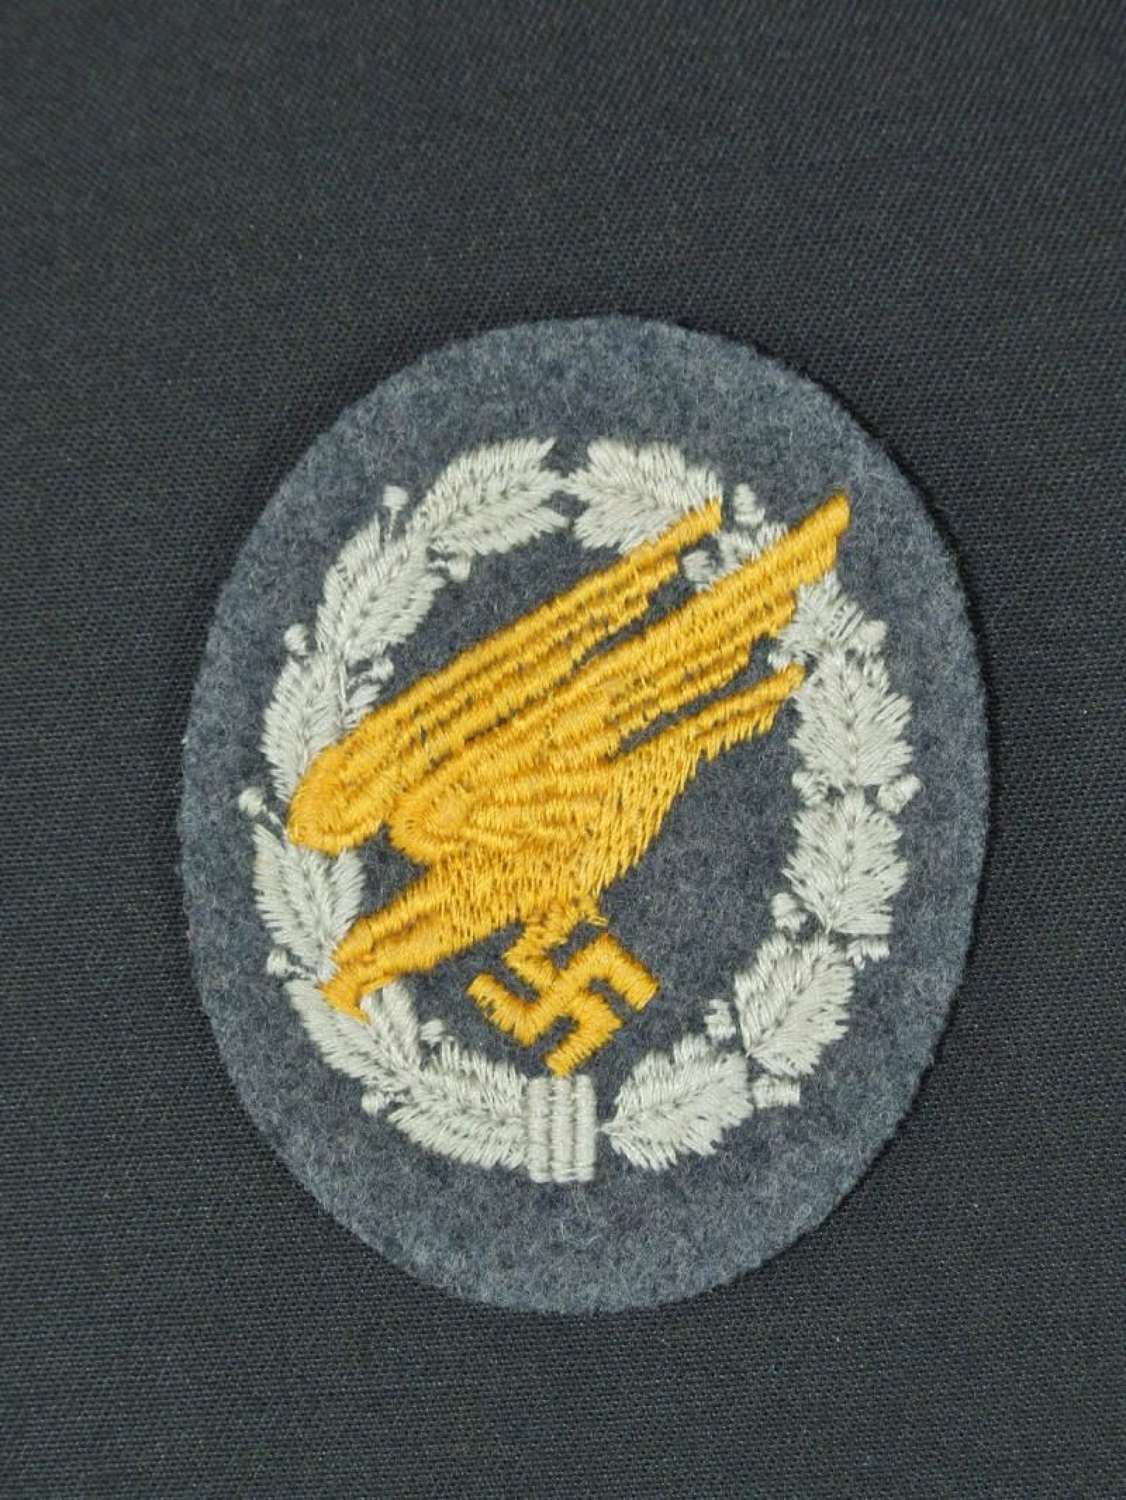 Luftwaffe Fallschirmjager Qualification Badge in Cloth